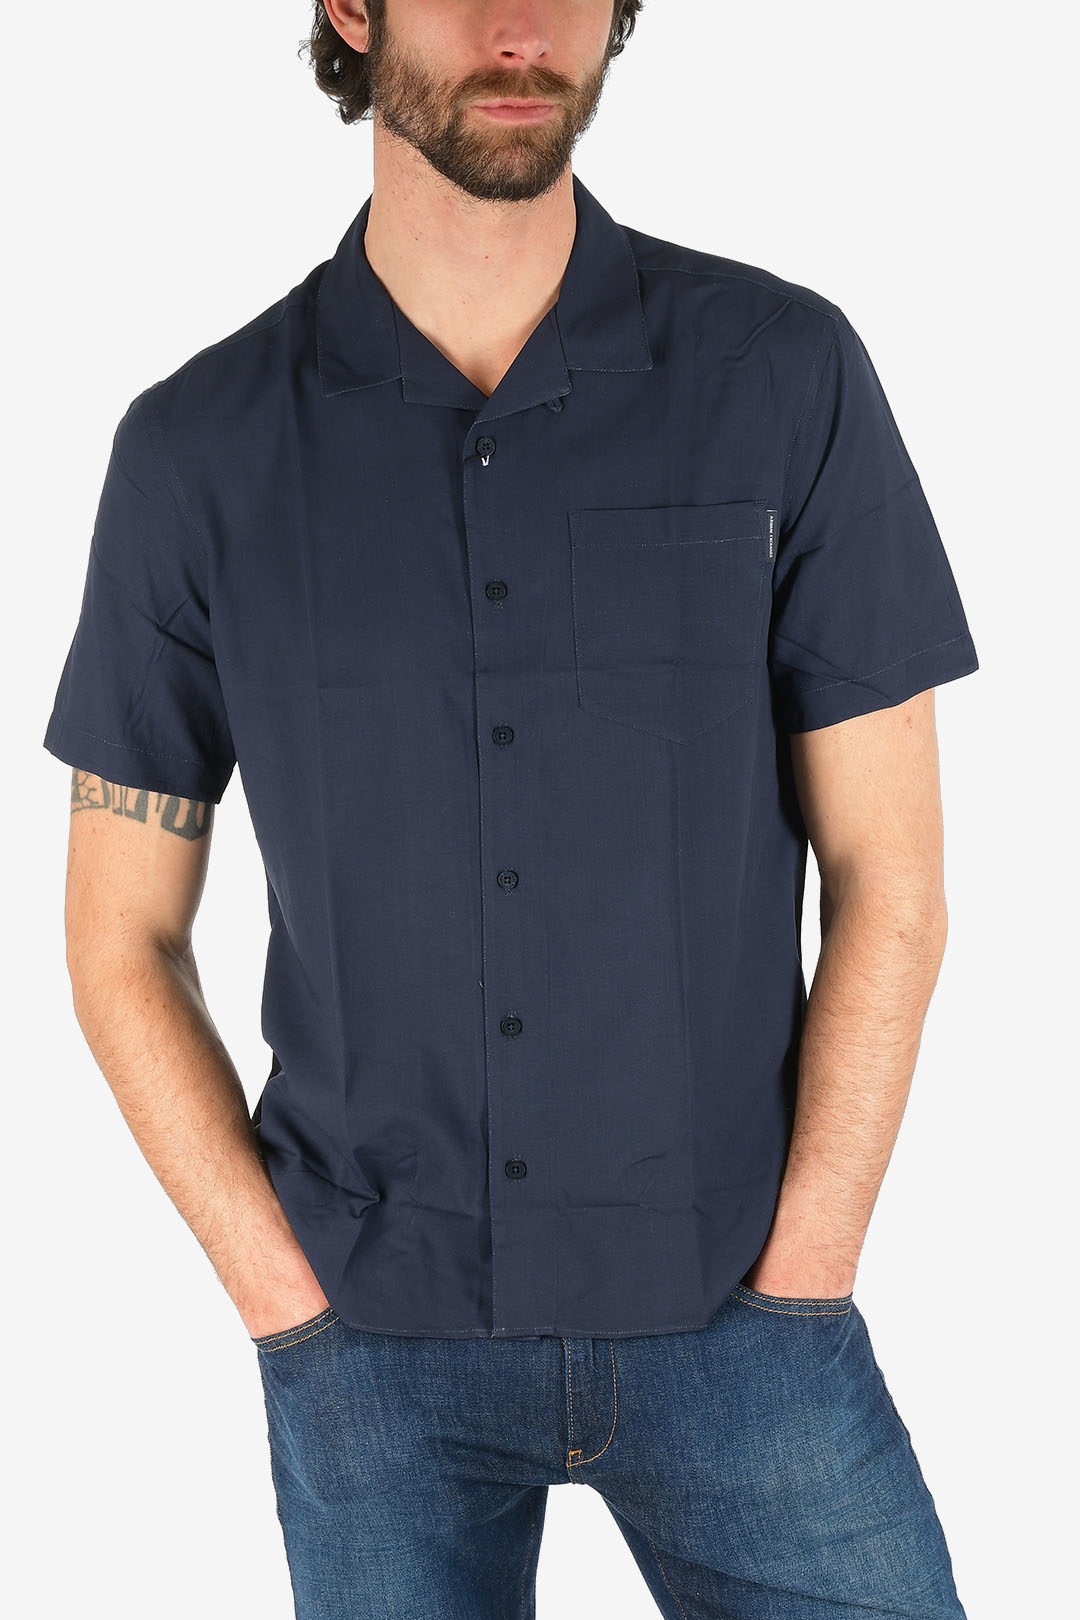 Armani ARMANI EXCHANGE Short Sleeve Shirt with Breast pocket men - Glamood  Outlet